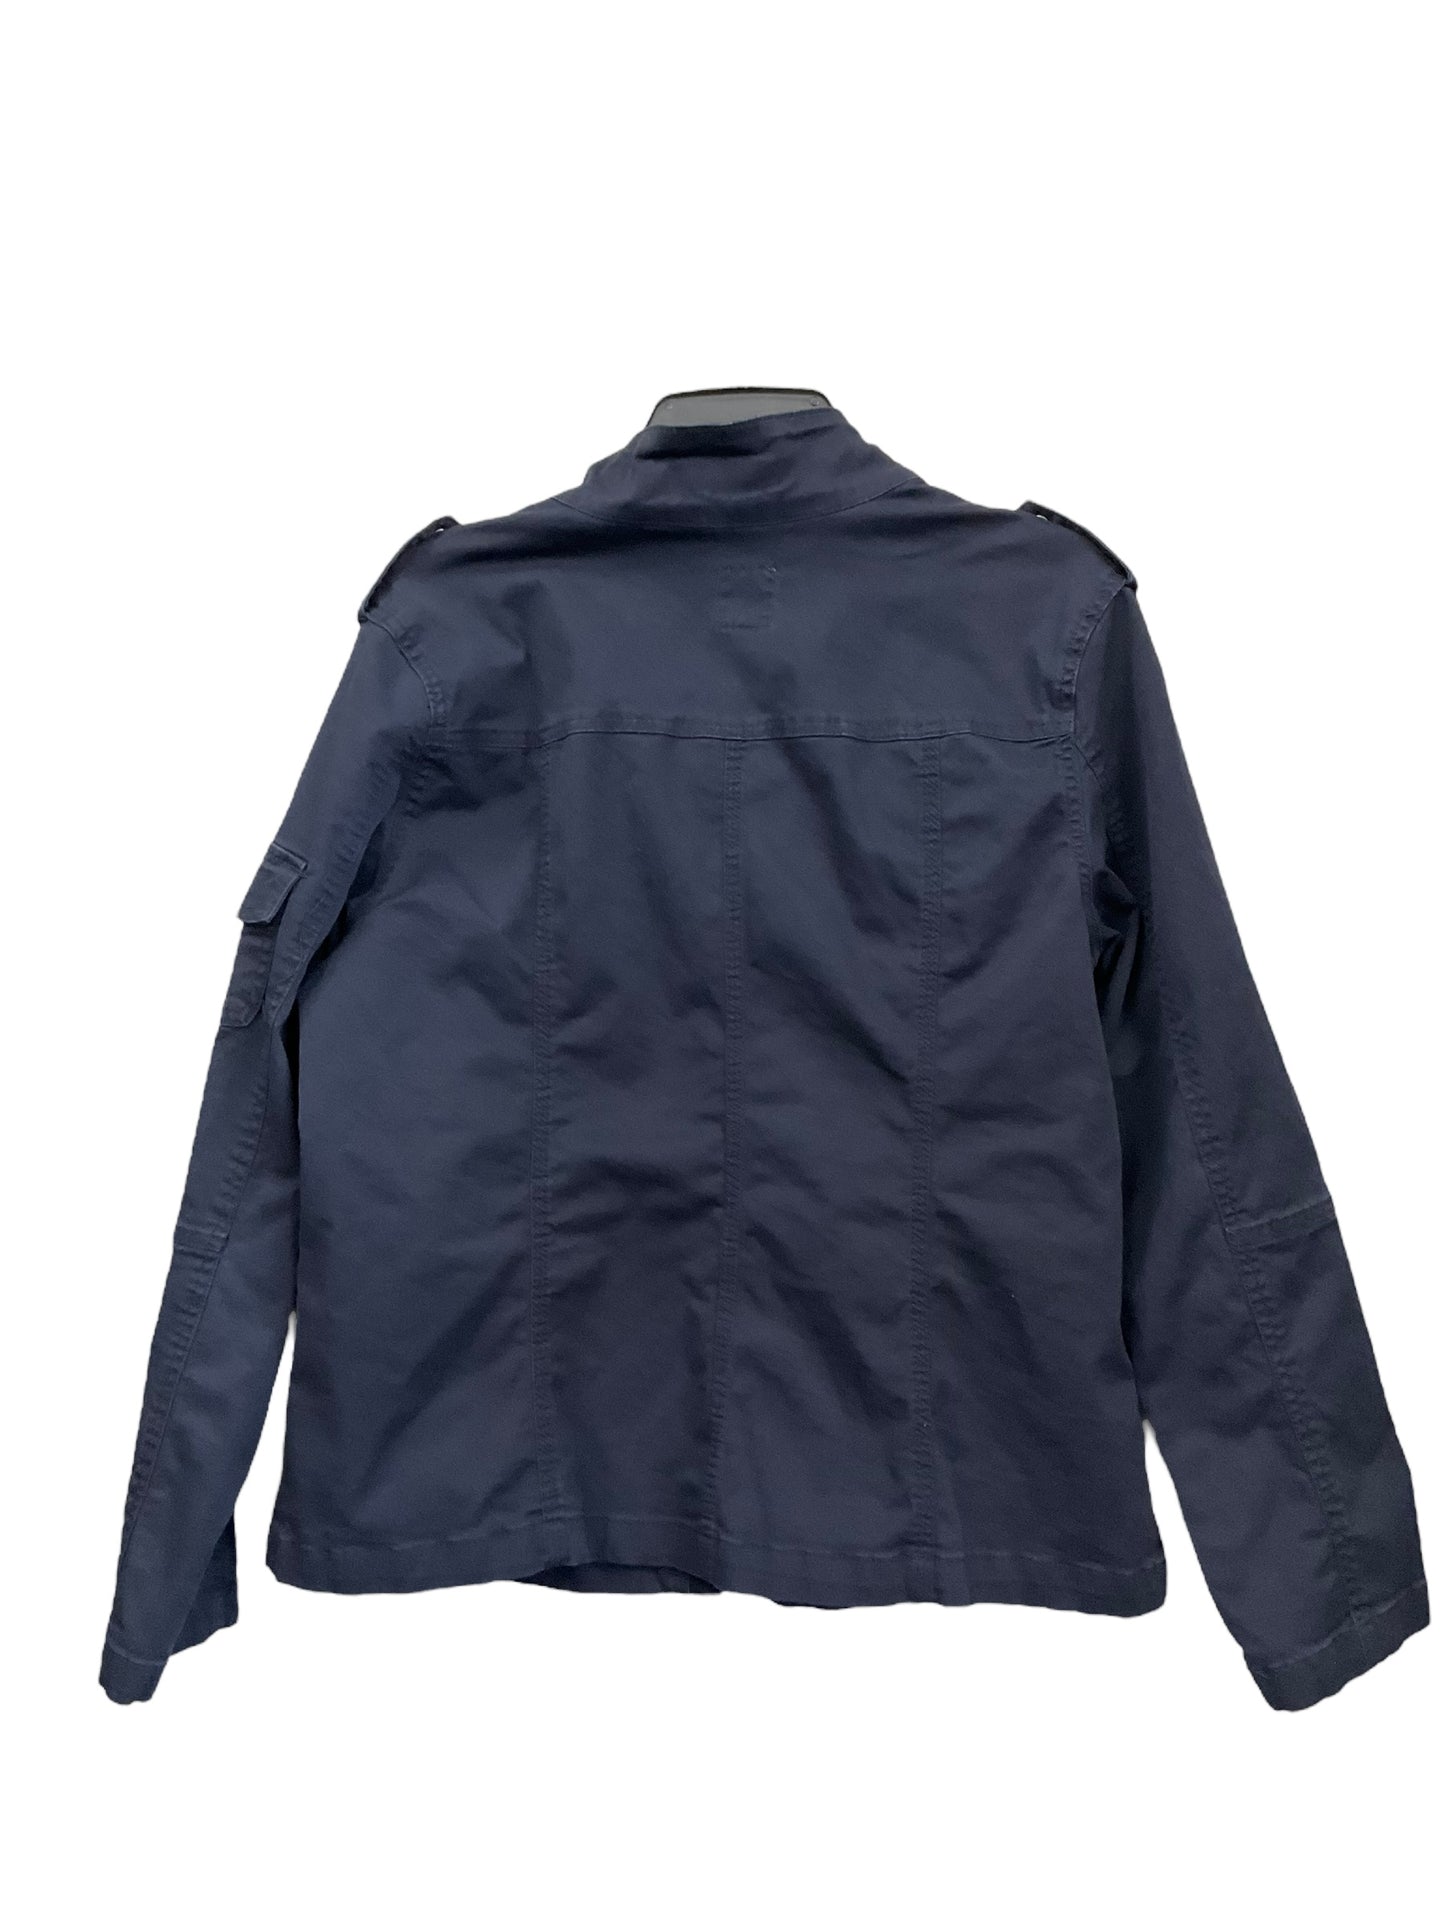 Jacket Utility By Kensie  Size: Xl